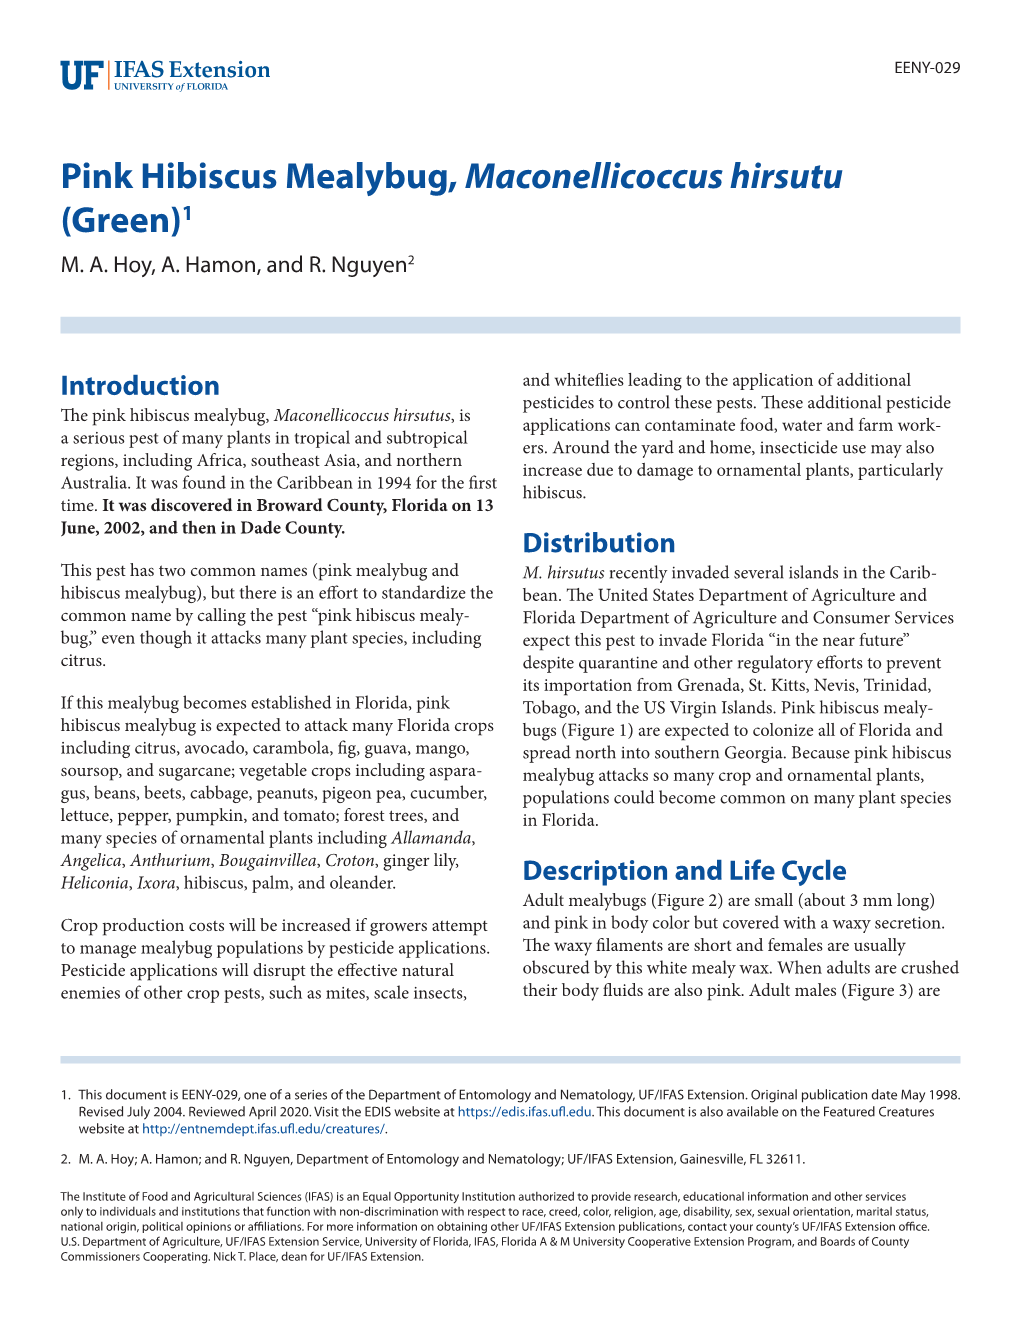 Pink Hibiscus Mealybug, Maconellicoccus Hirsutu (Green)1 M